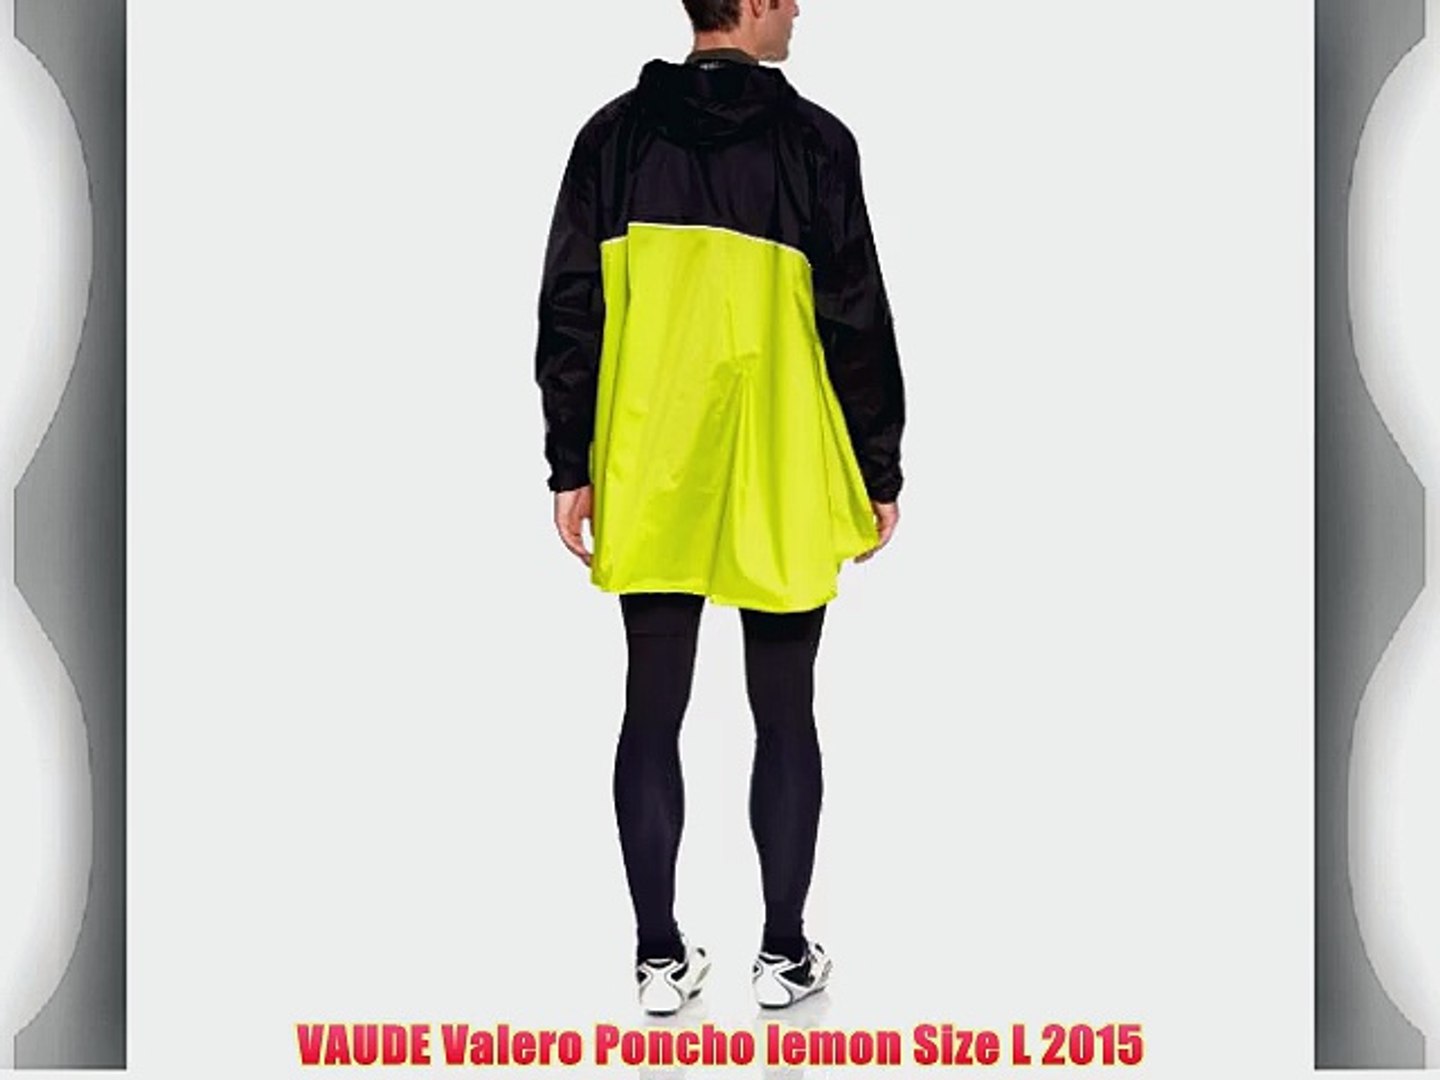 VAUDE Valero Poncho lemon Size L 2015 - video Dailymotion